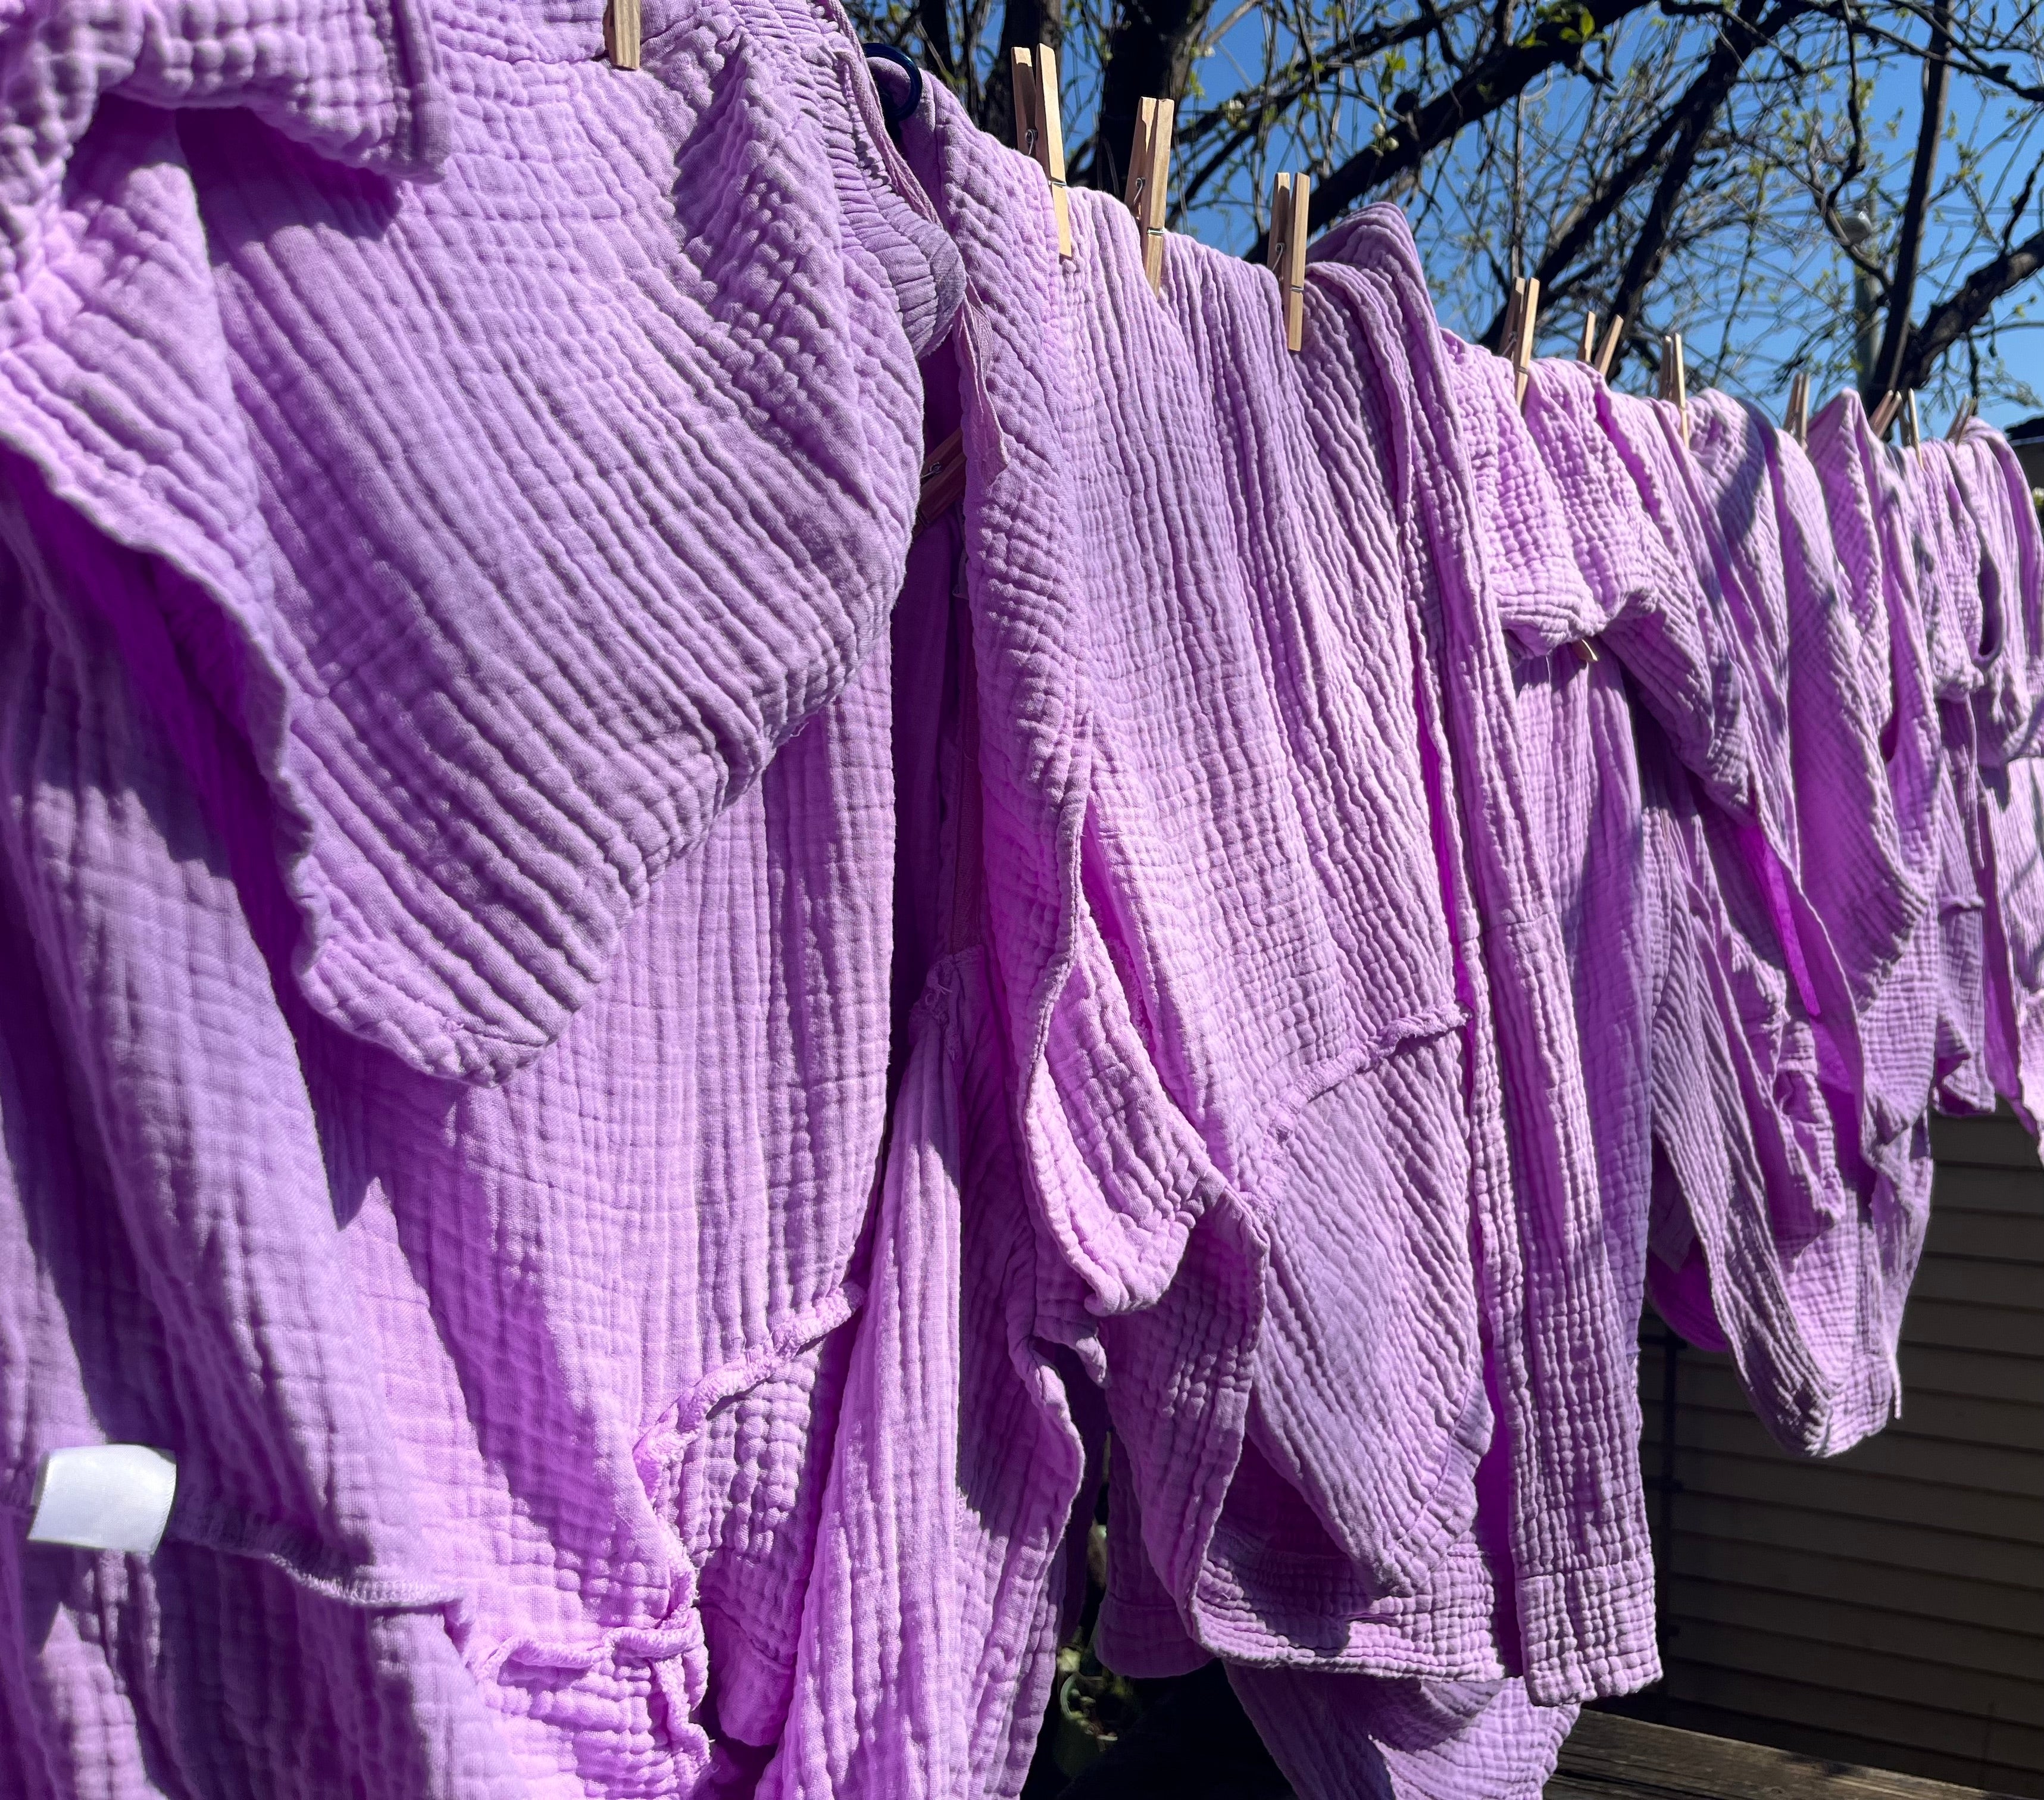 Lavender cotton gauze clothing